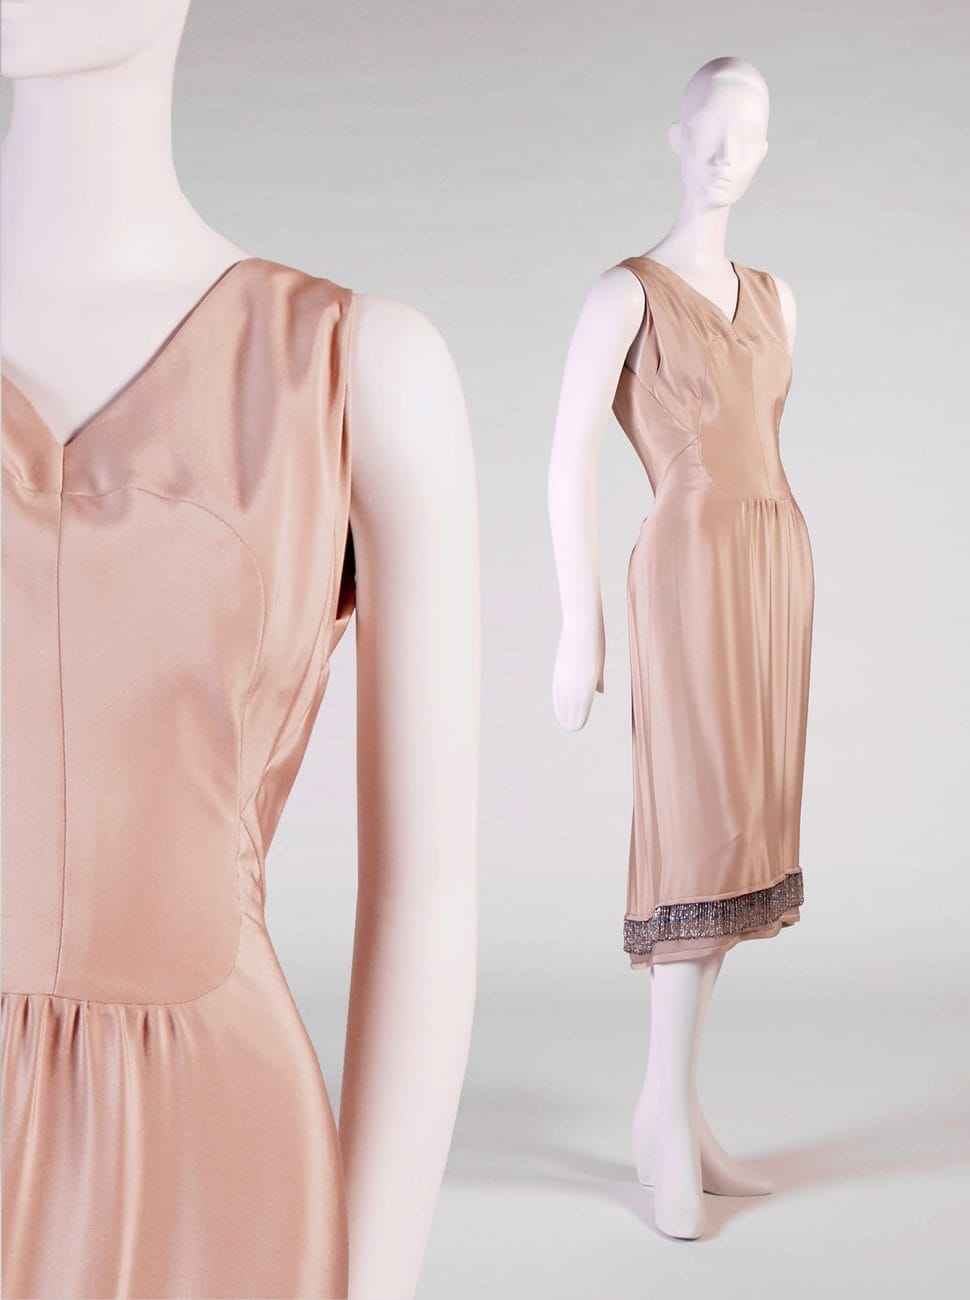 Silk Crepe Dress, 1984